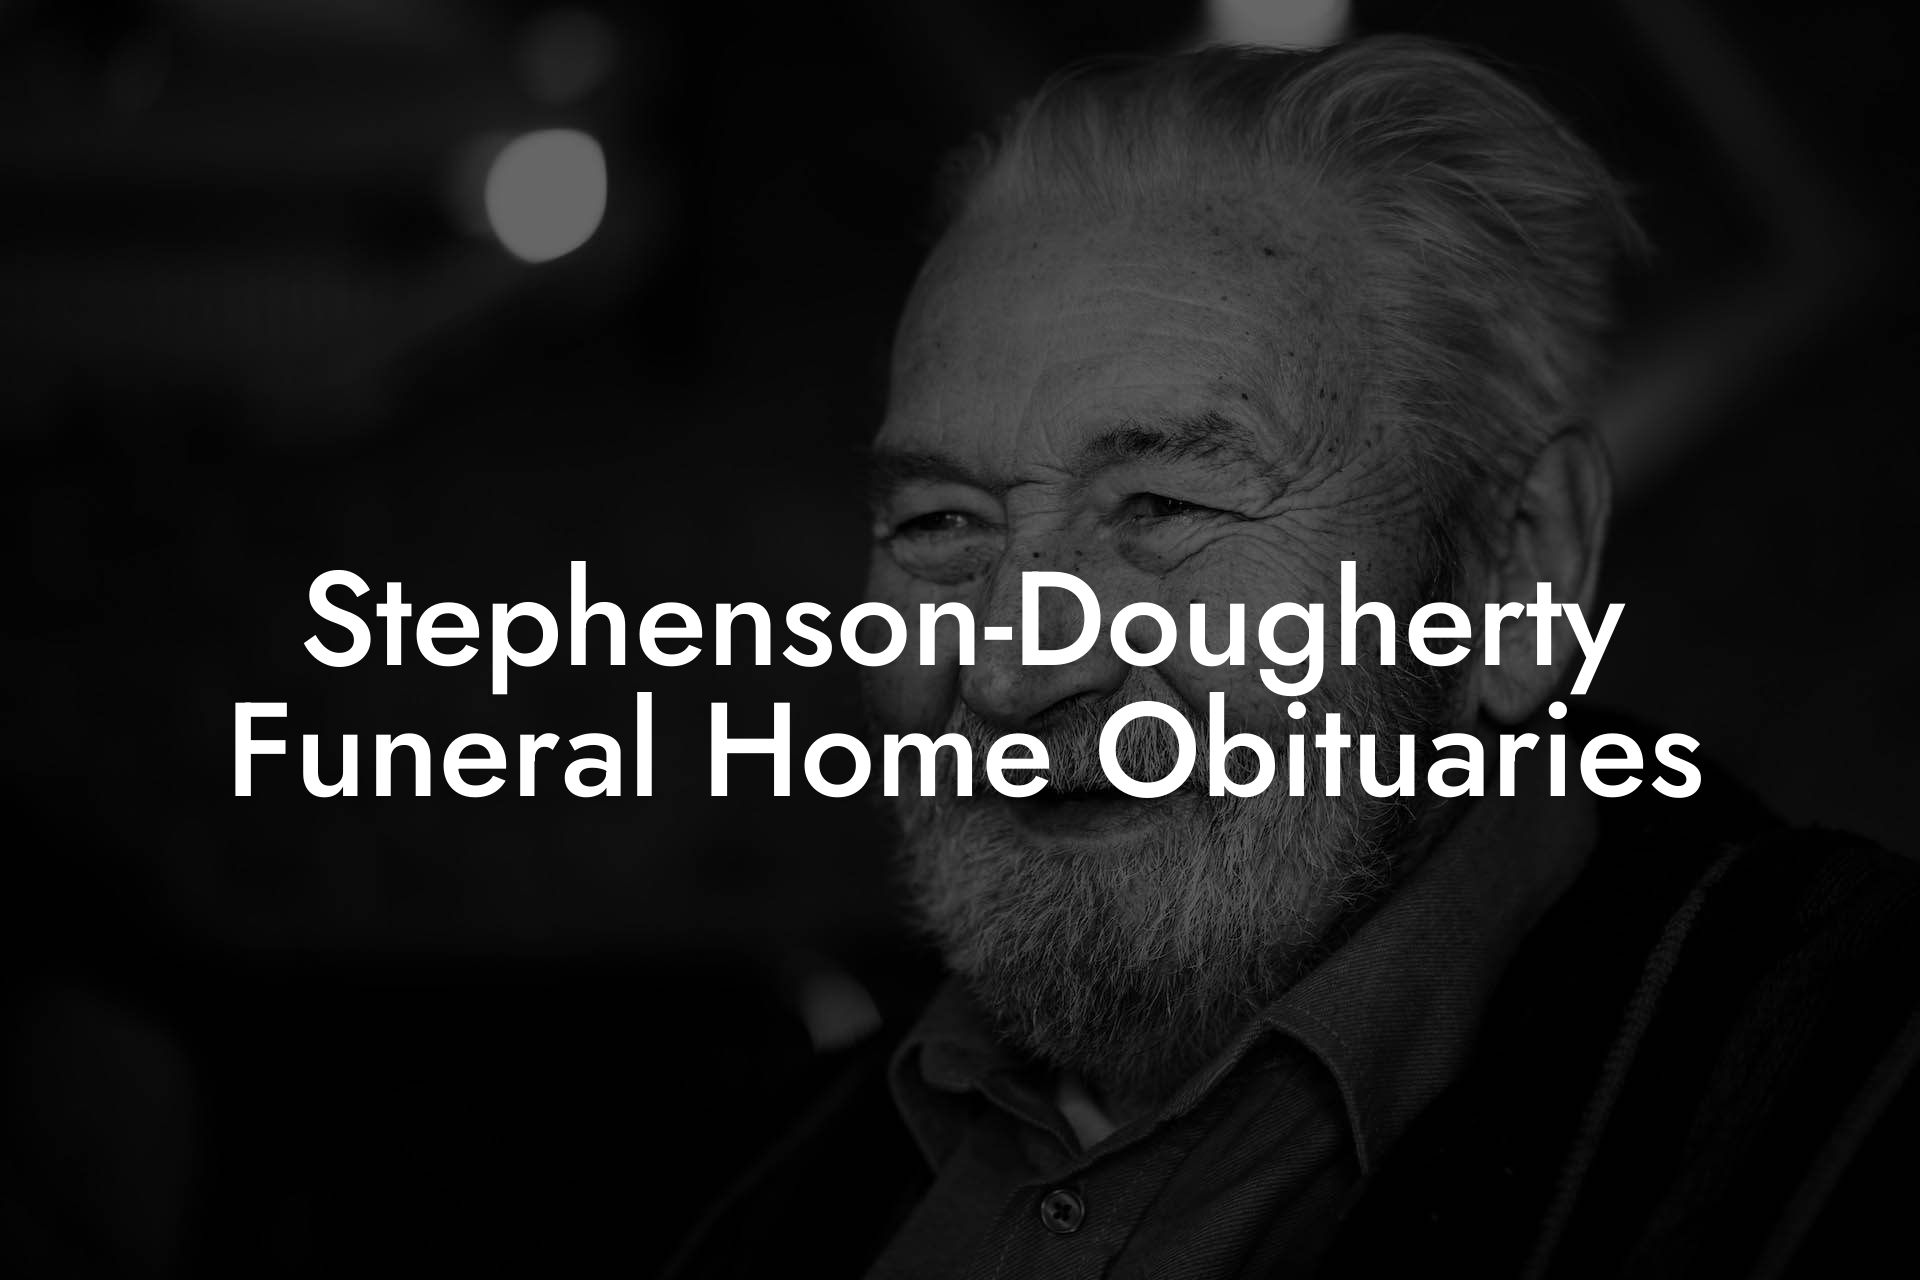 Stephenson-Dougherty Funeral Home Obituaries